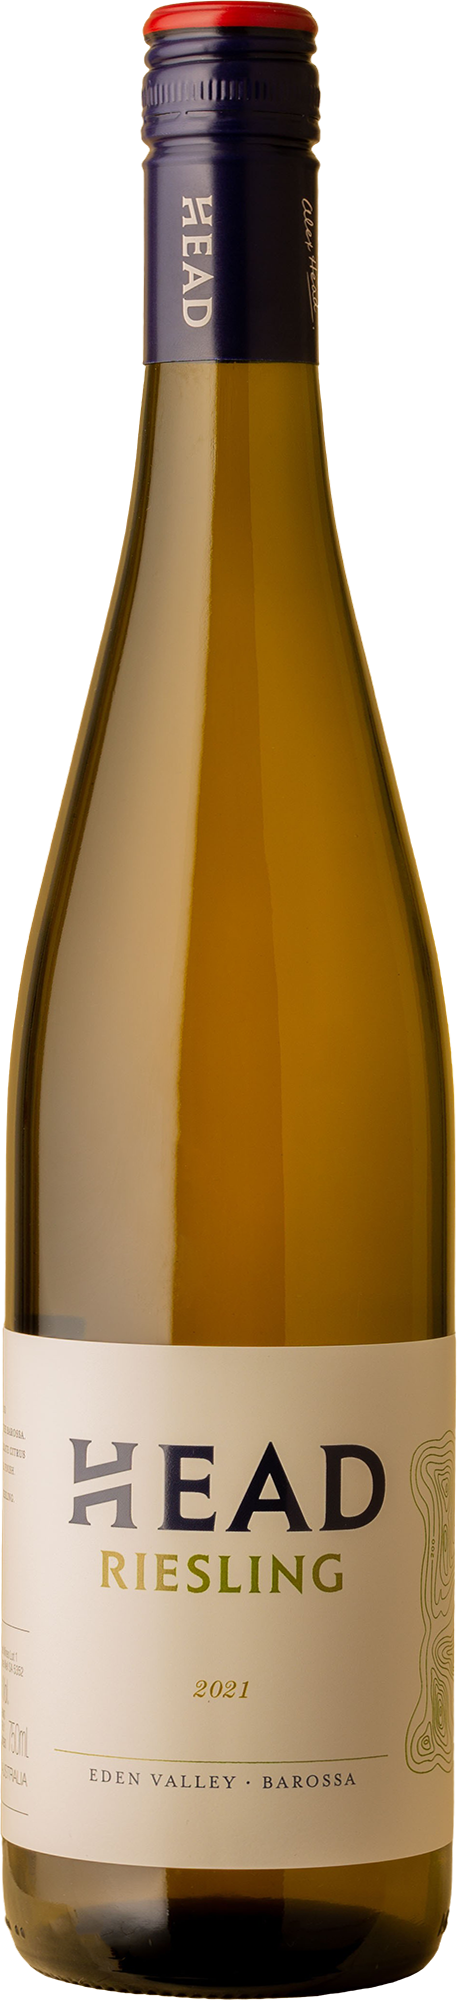 Head - Riesling 2021 White Wine